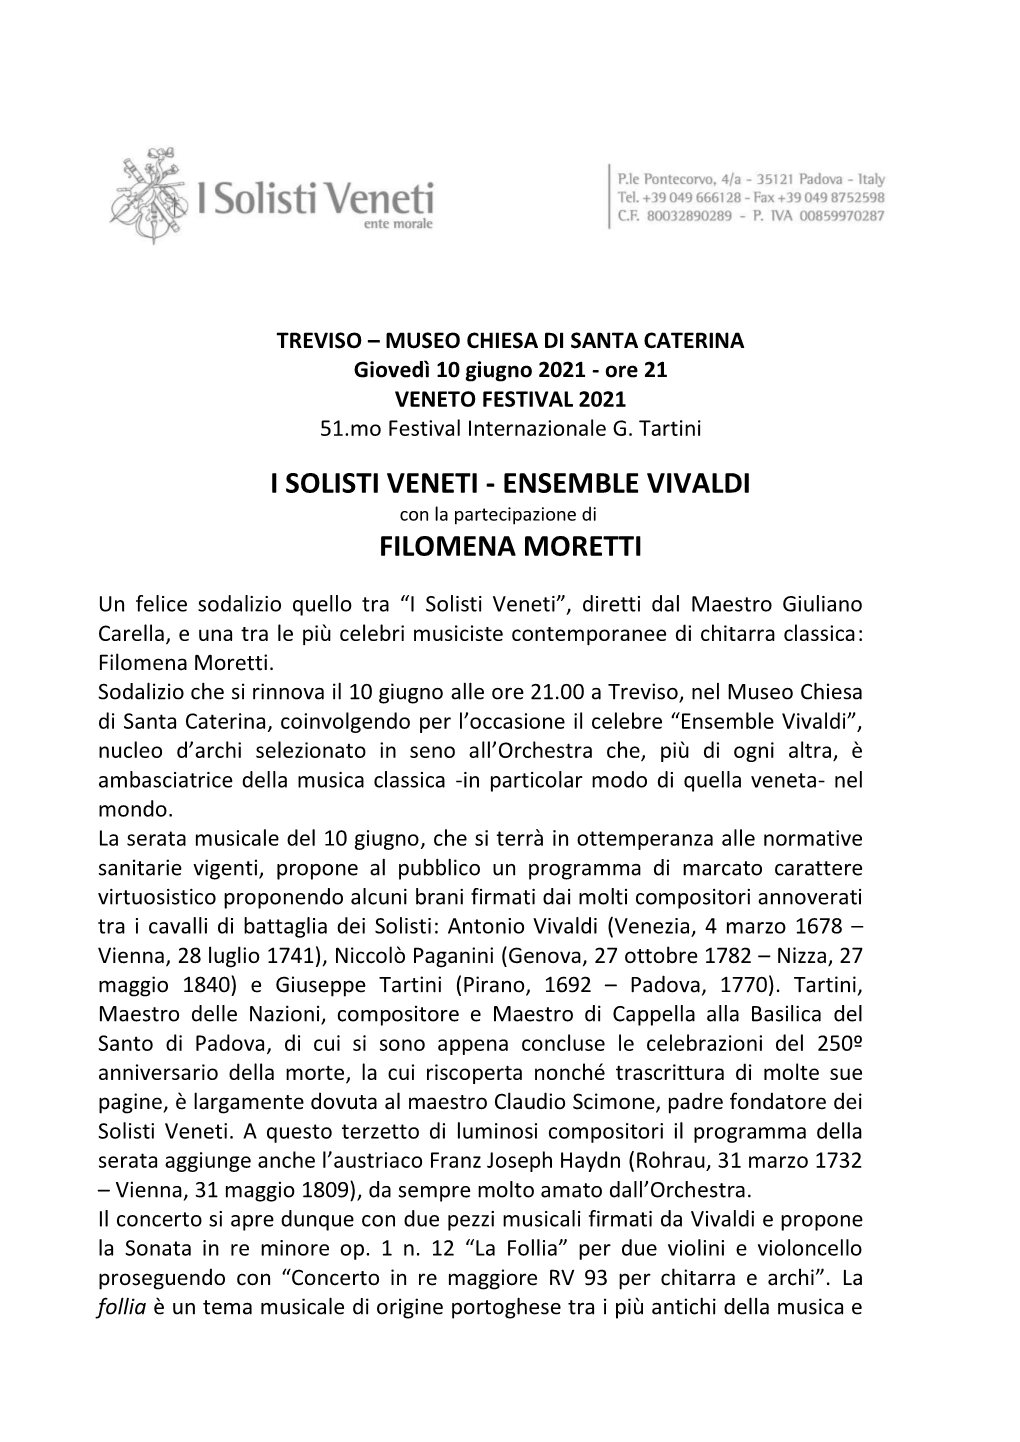 Ensemble Vivaldi Filomena Moretti